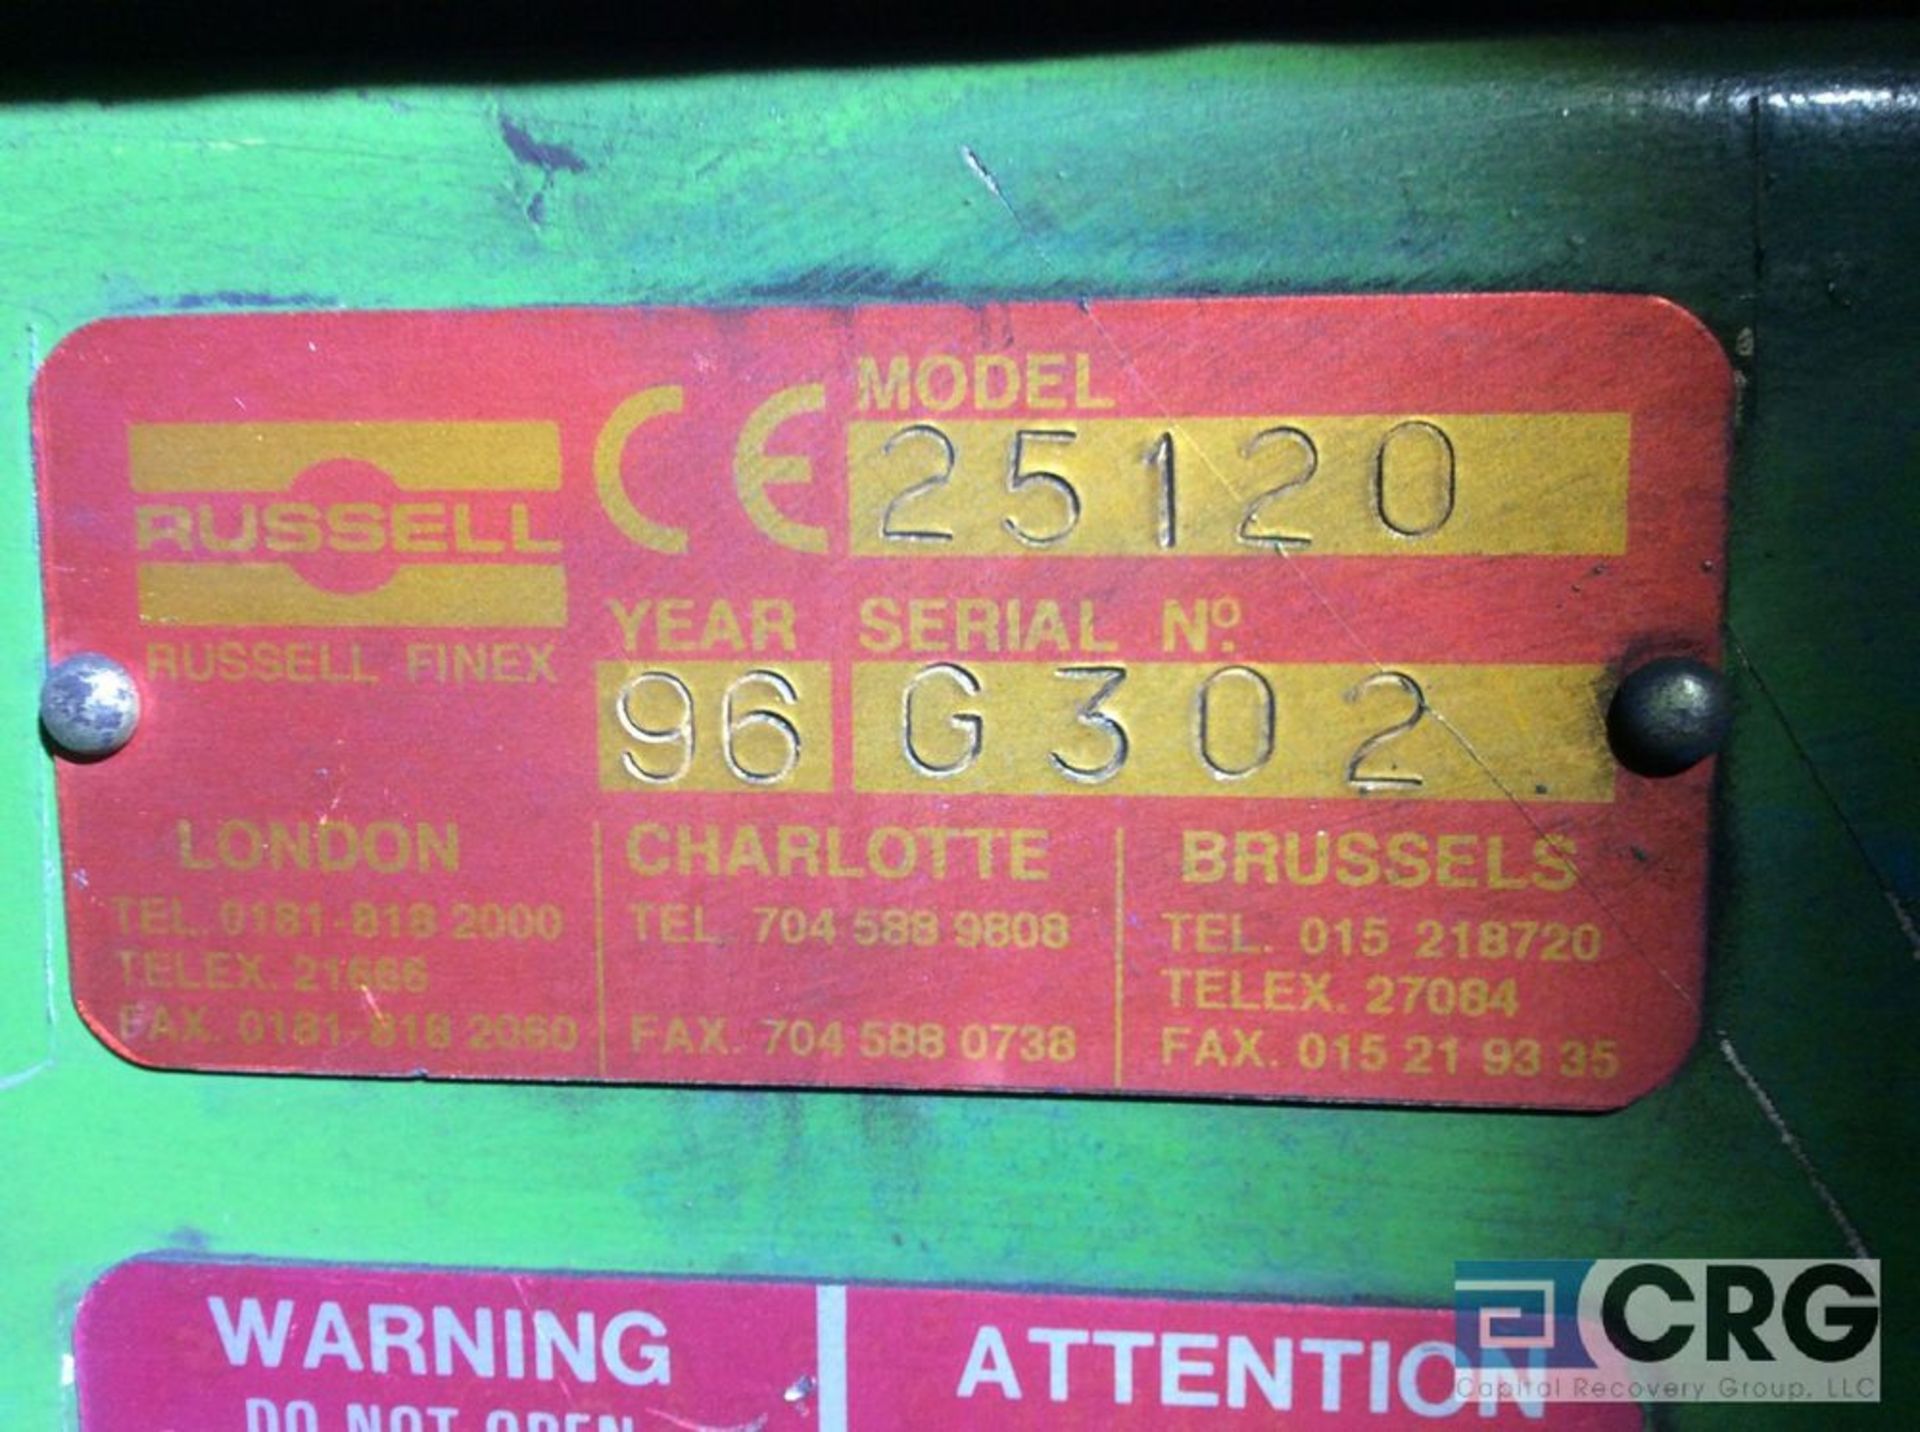 1996 Russell 48” stainless steelvibratory sieve screener, mn 25120, sn G302 - Image 2 of 2